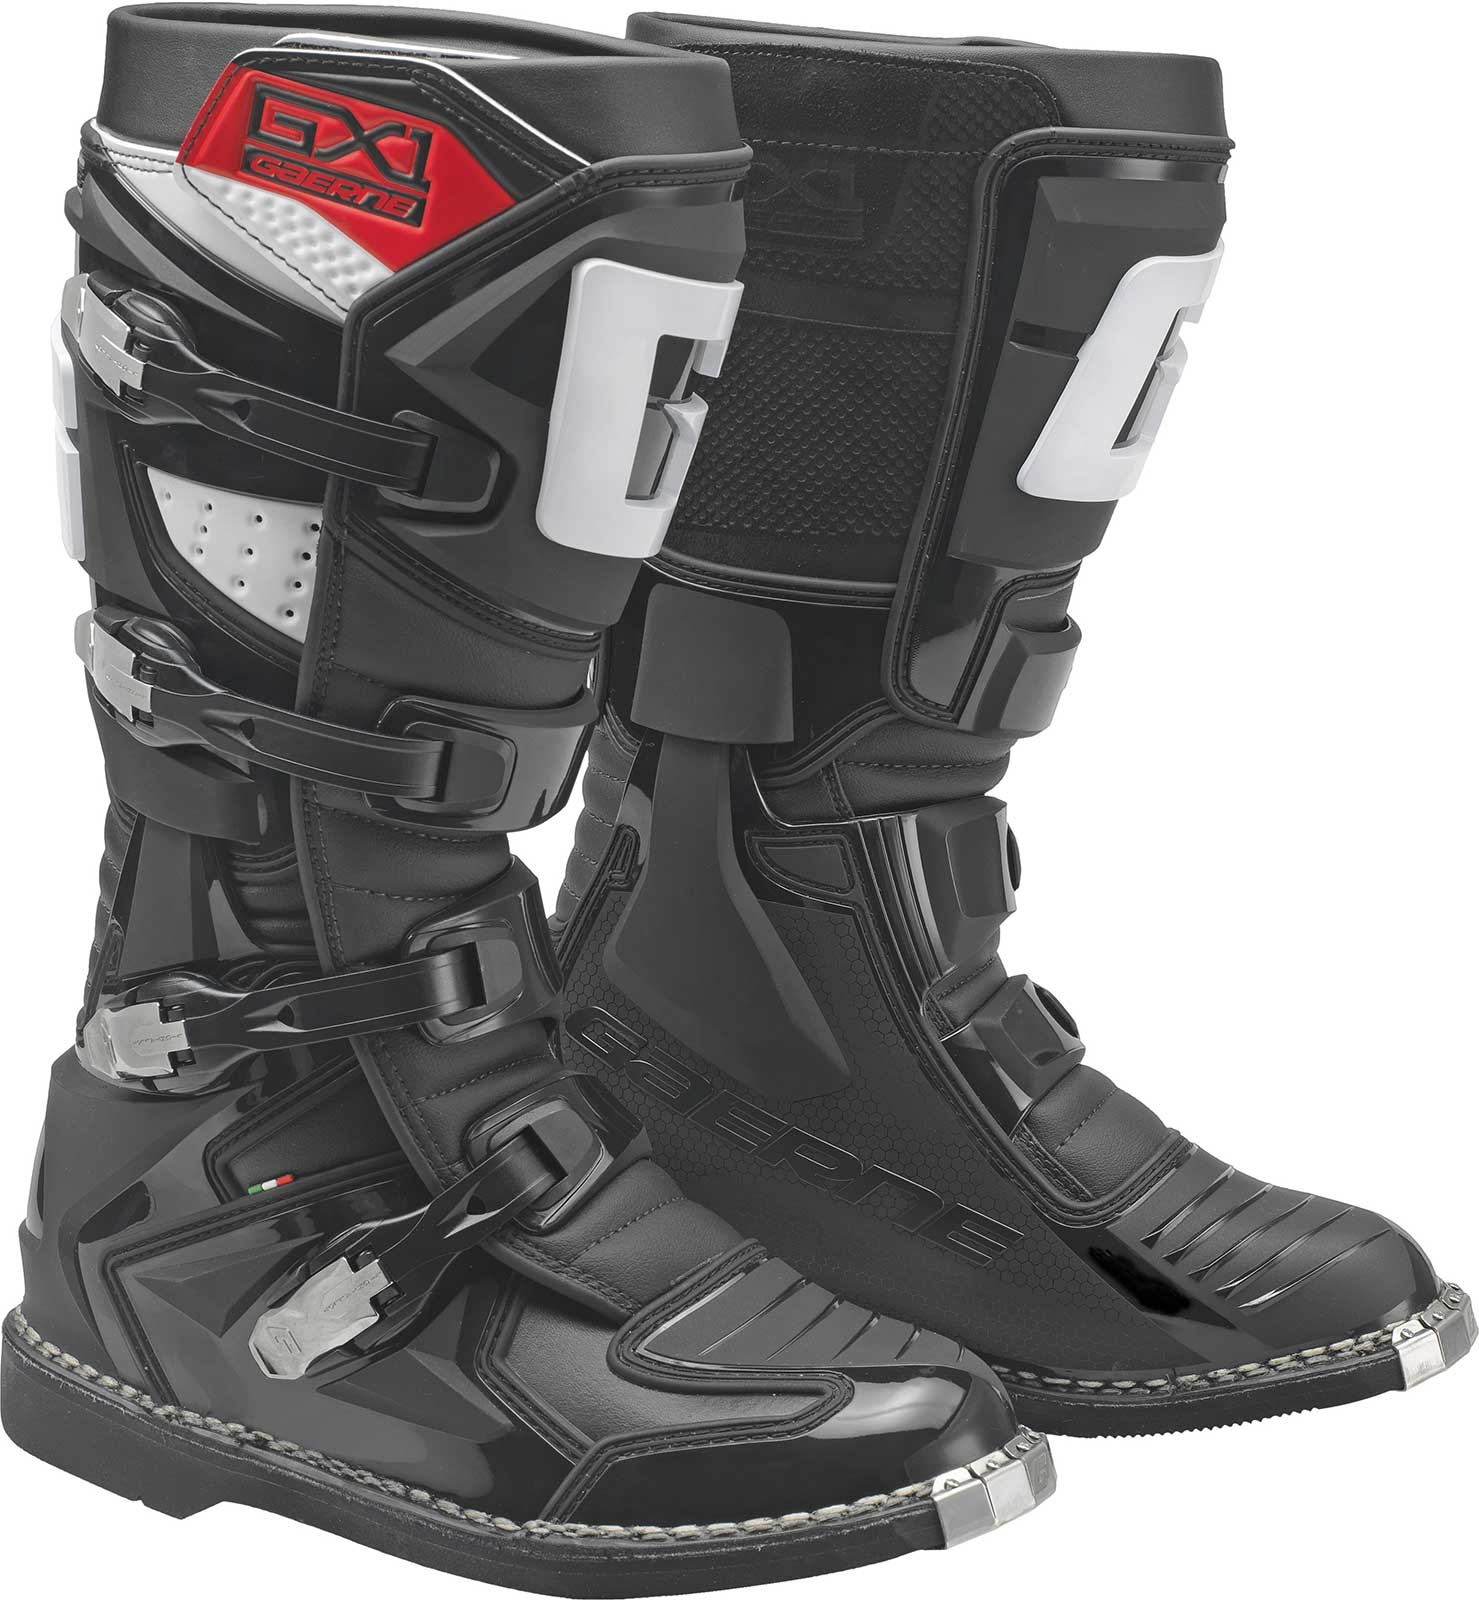 Gaerne GX-1 Boots Motocross Dirtbike